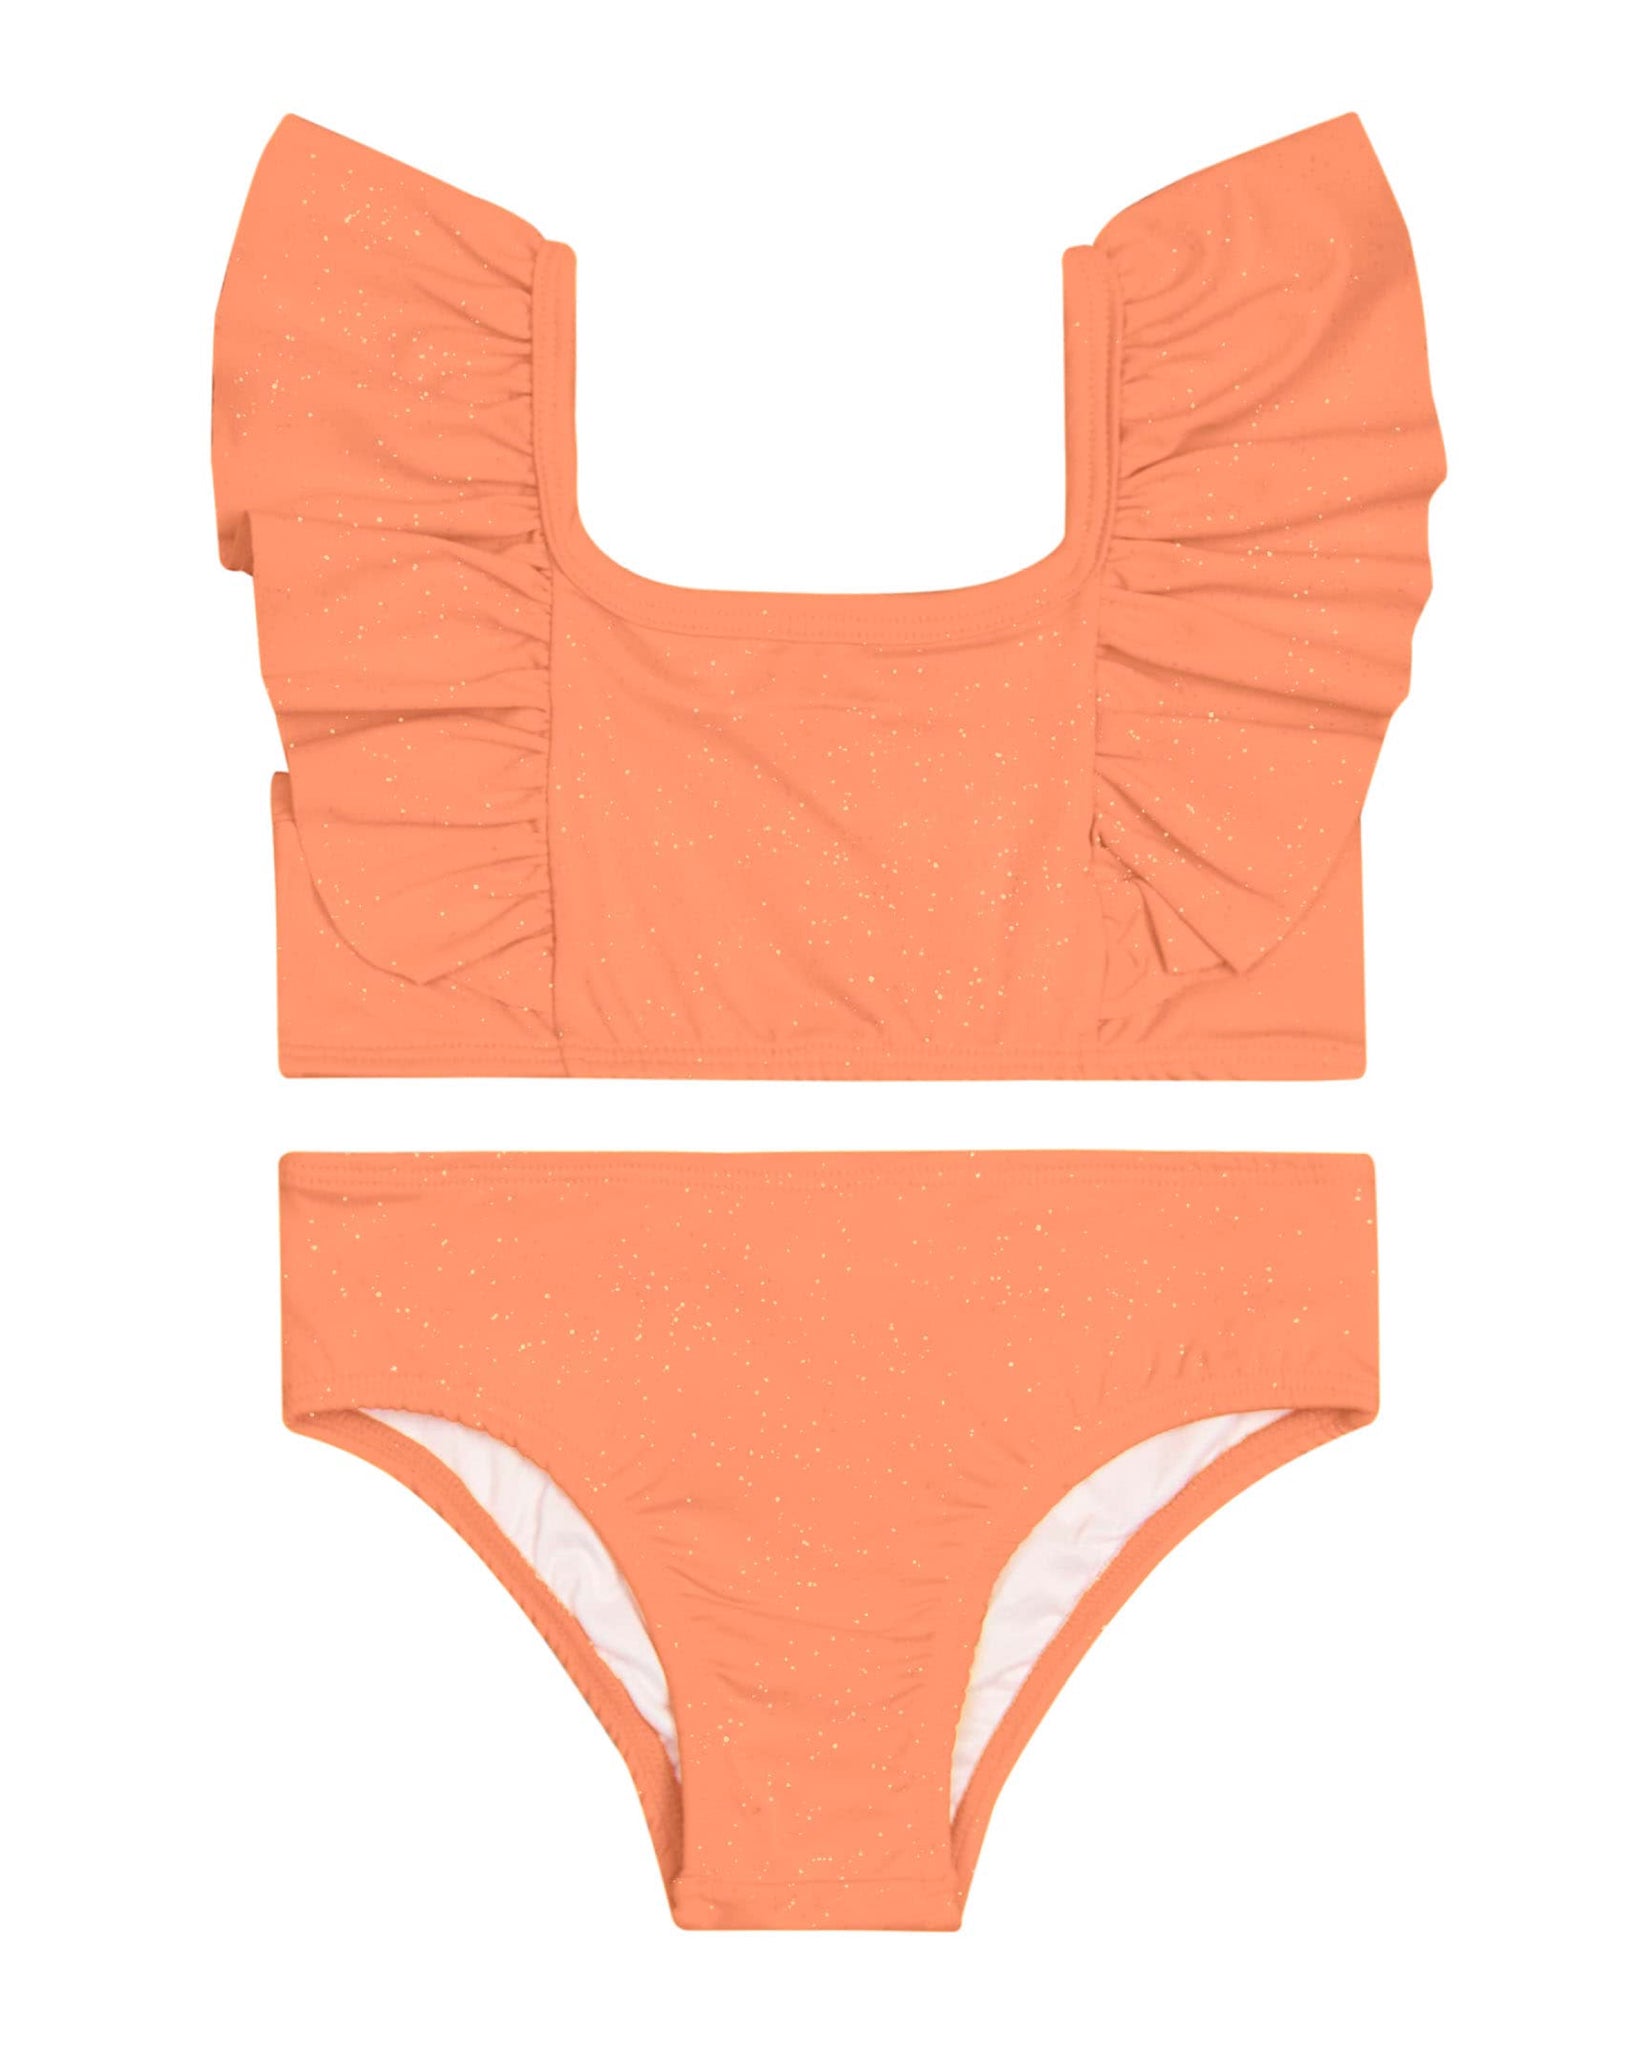 Orange Shimmery Bikini